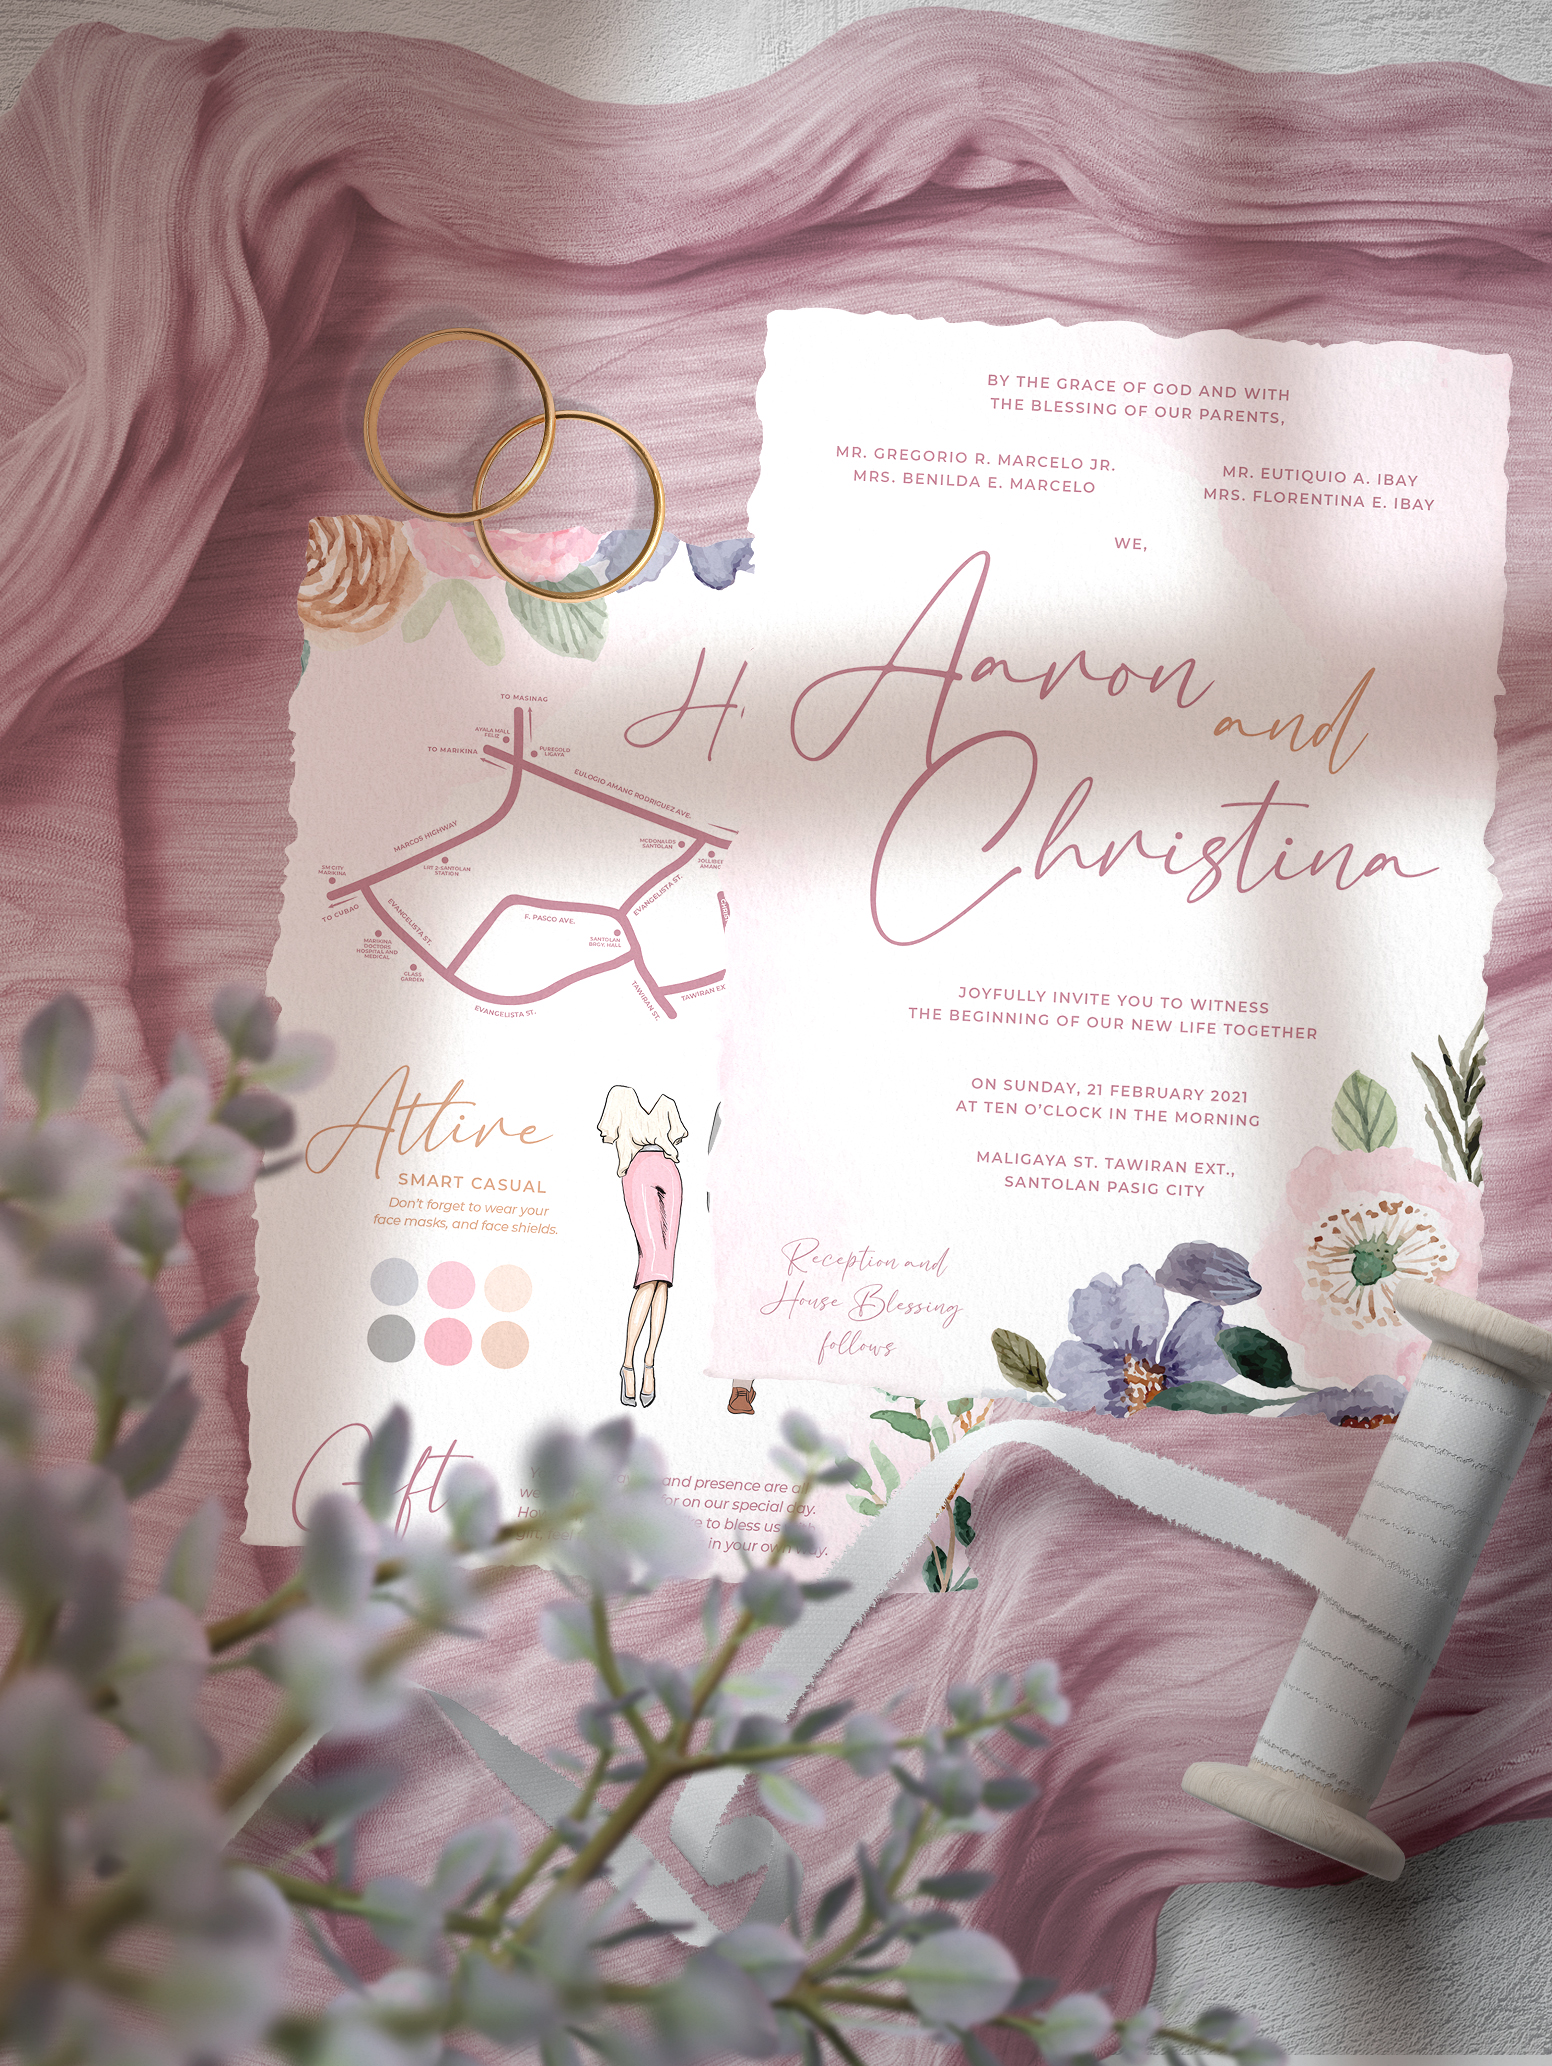 667-aaron-and-christina-wedding-invitation